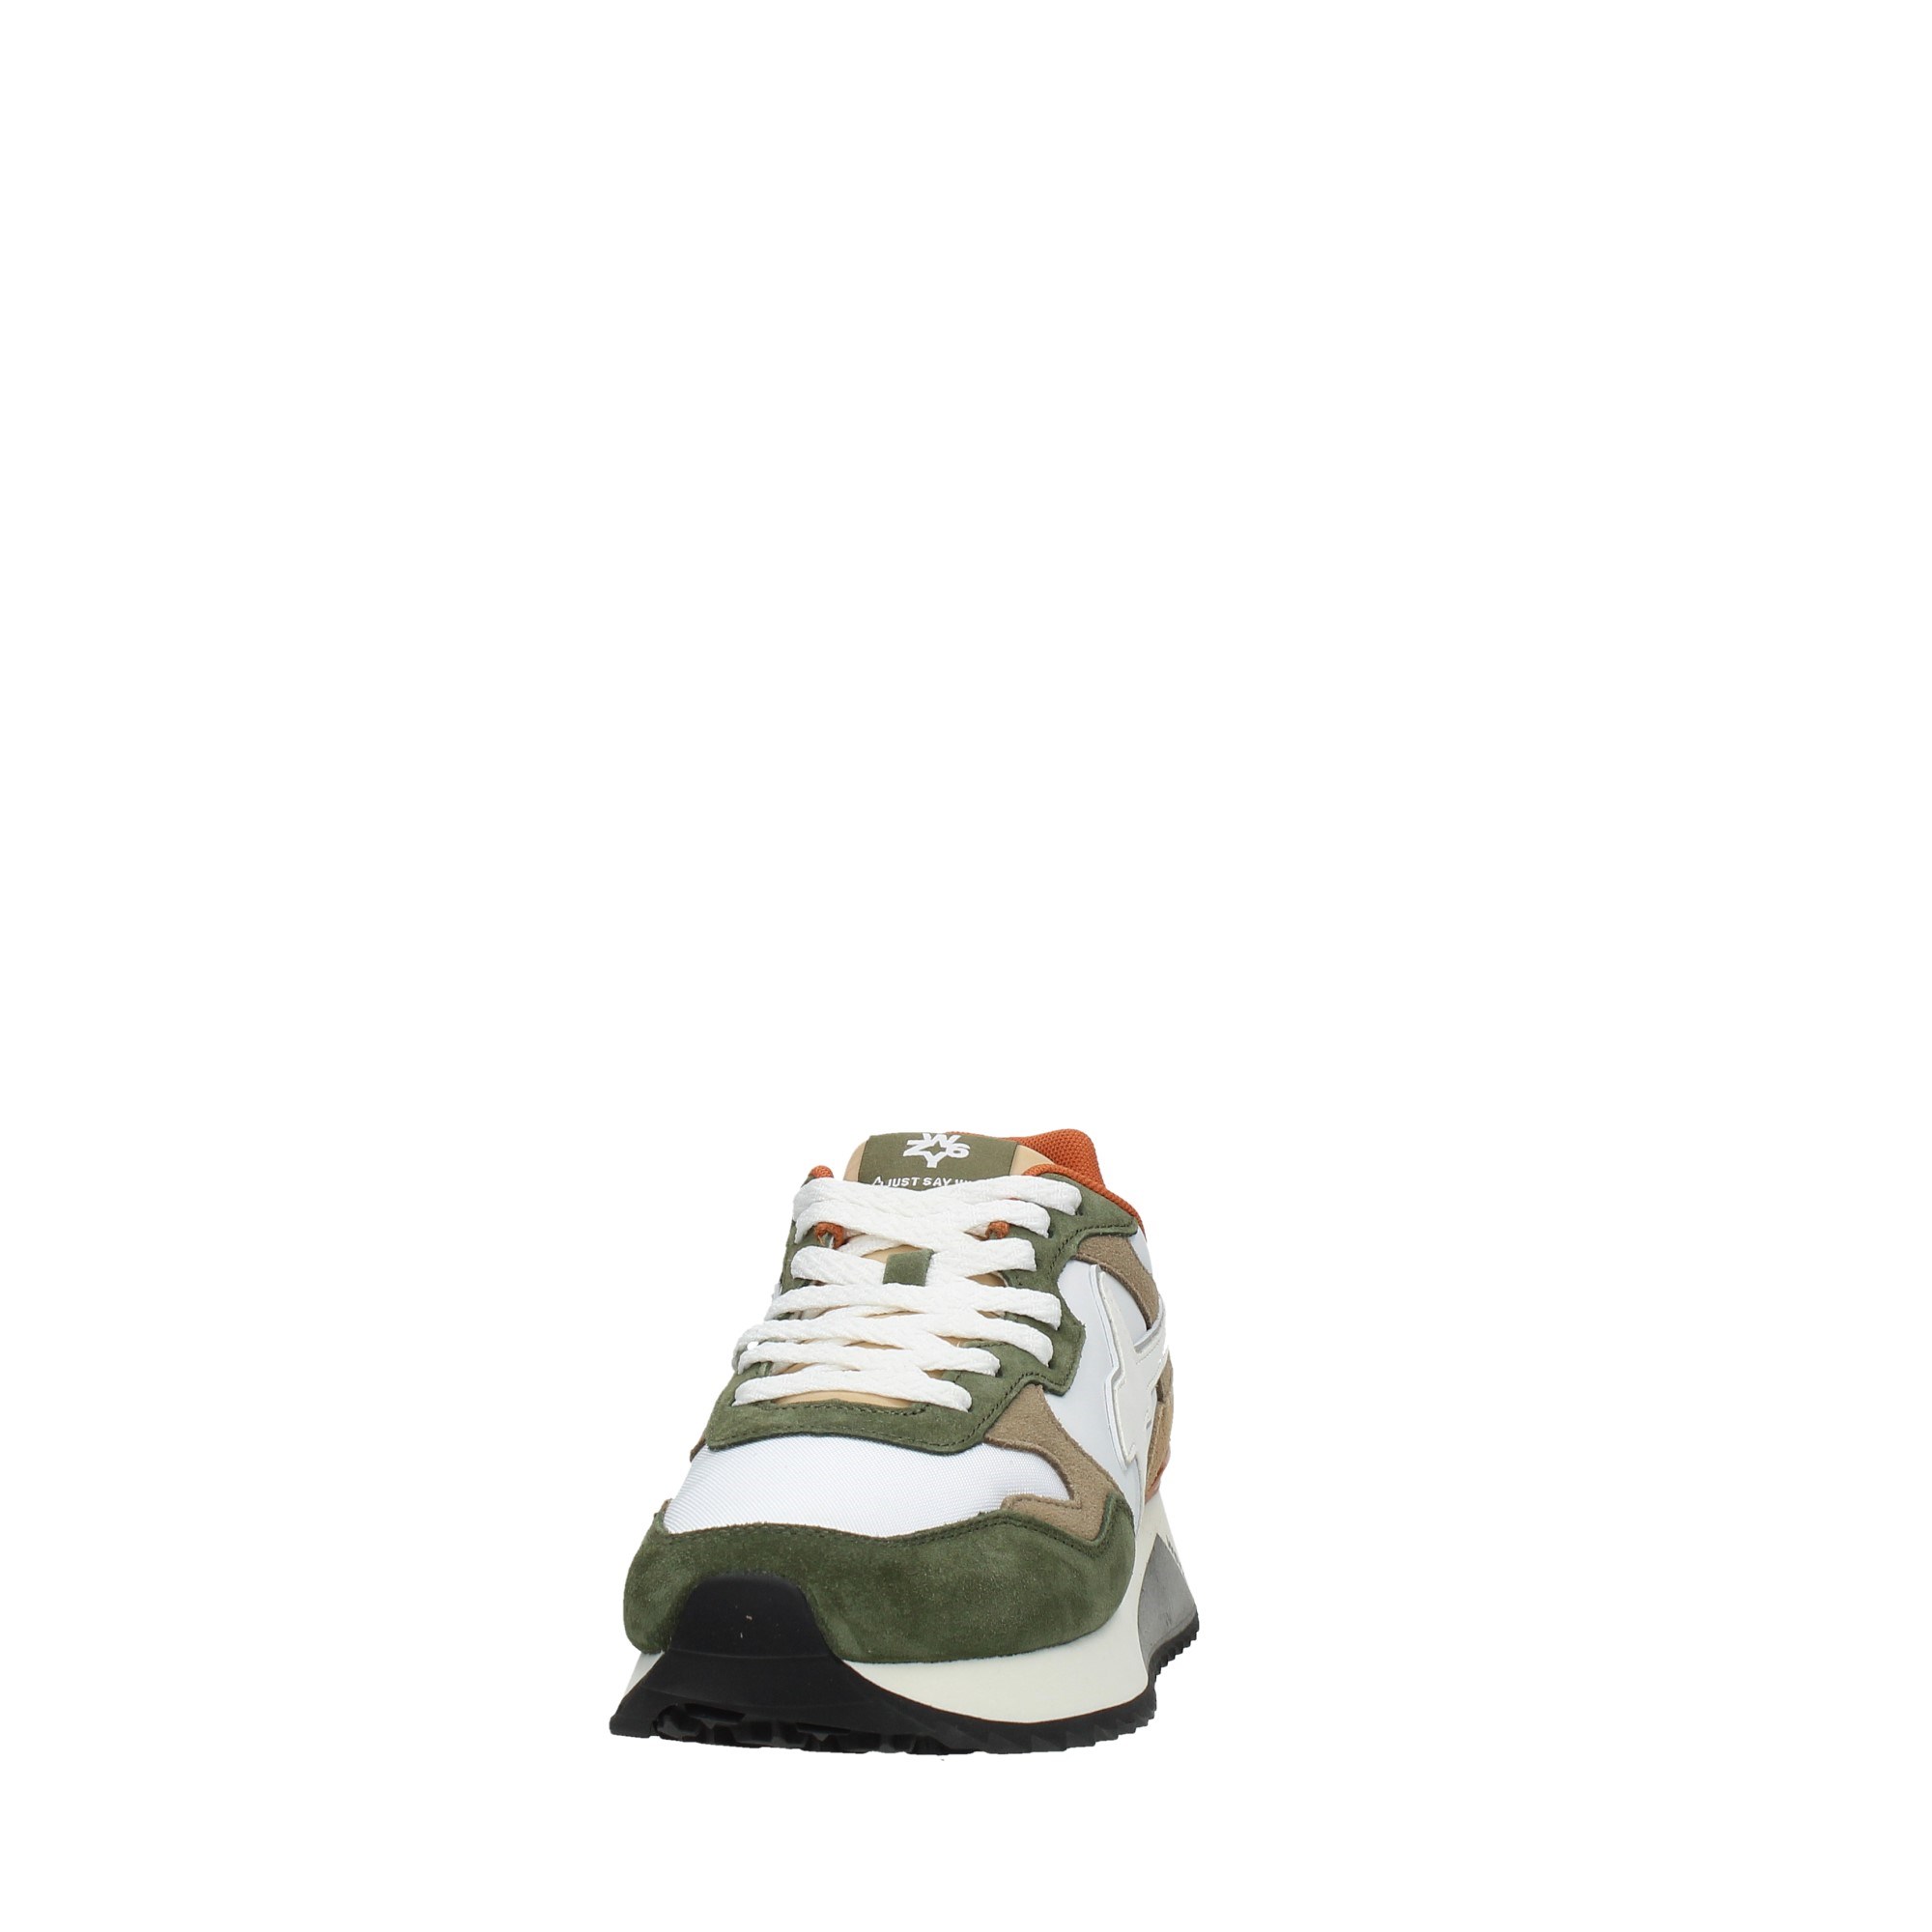 W6yz Scarpe Uomo Sneakers Verde YAK-M 2F26